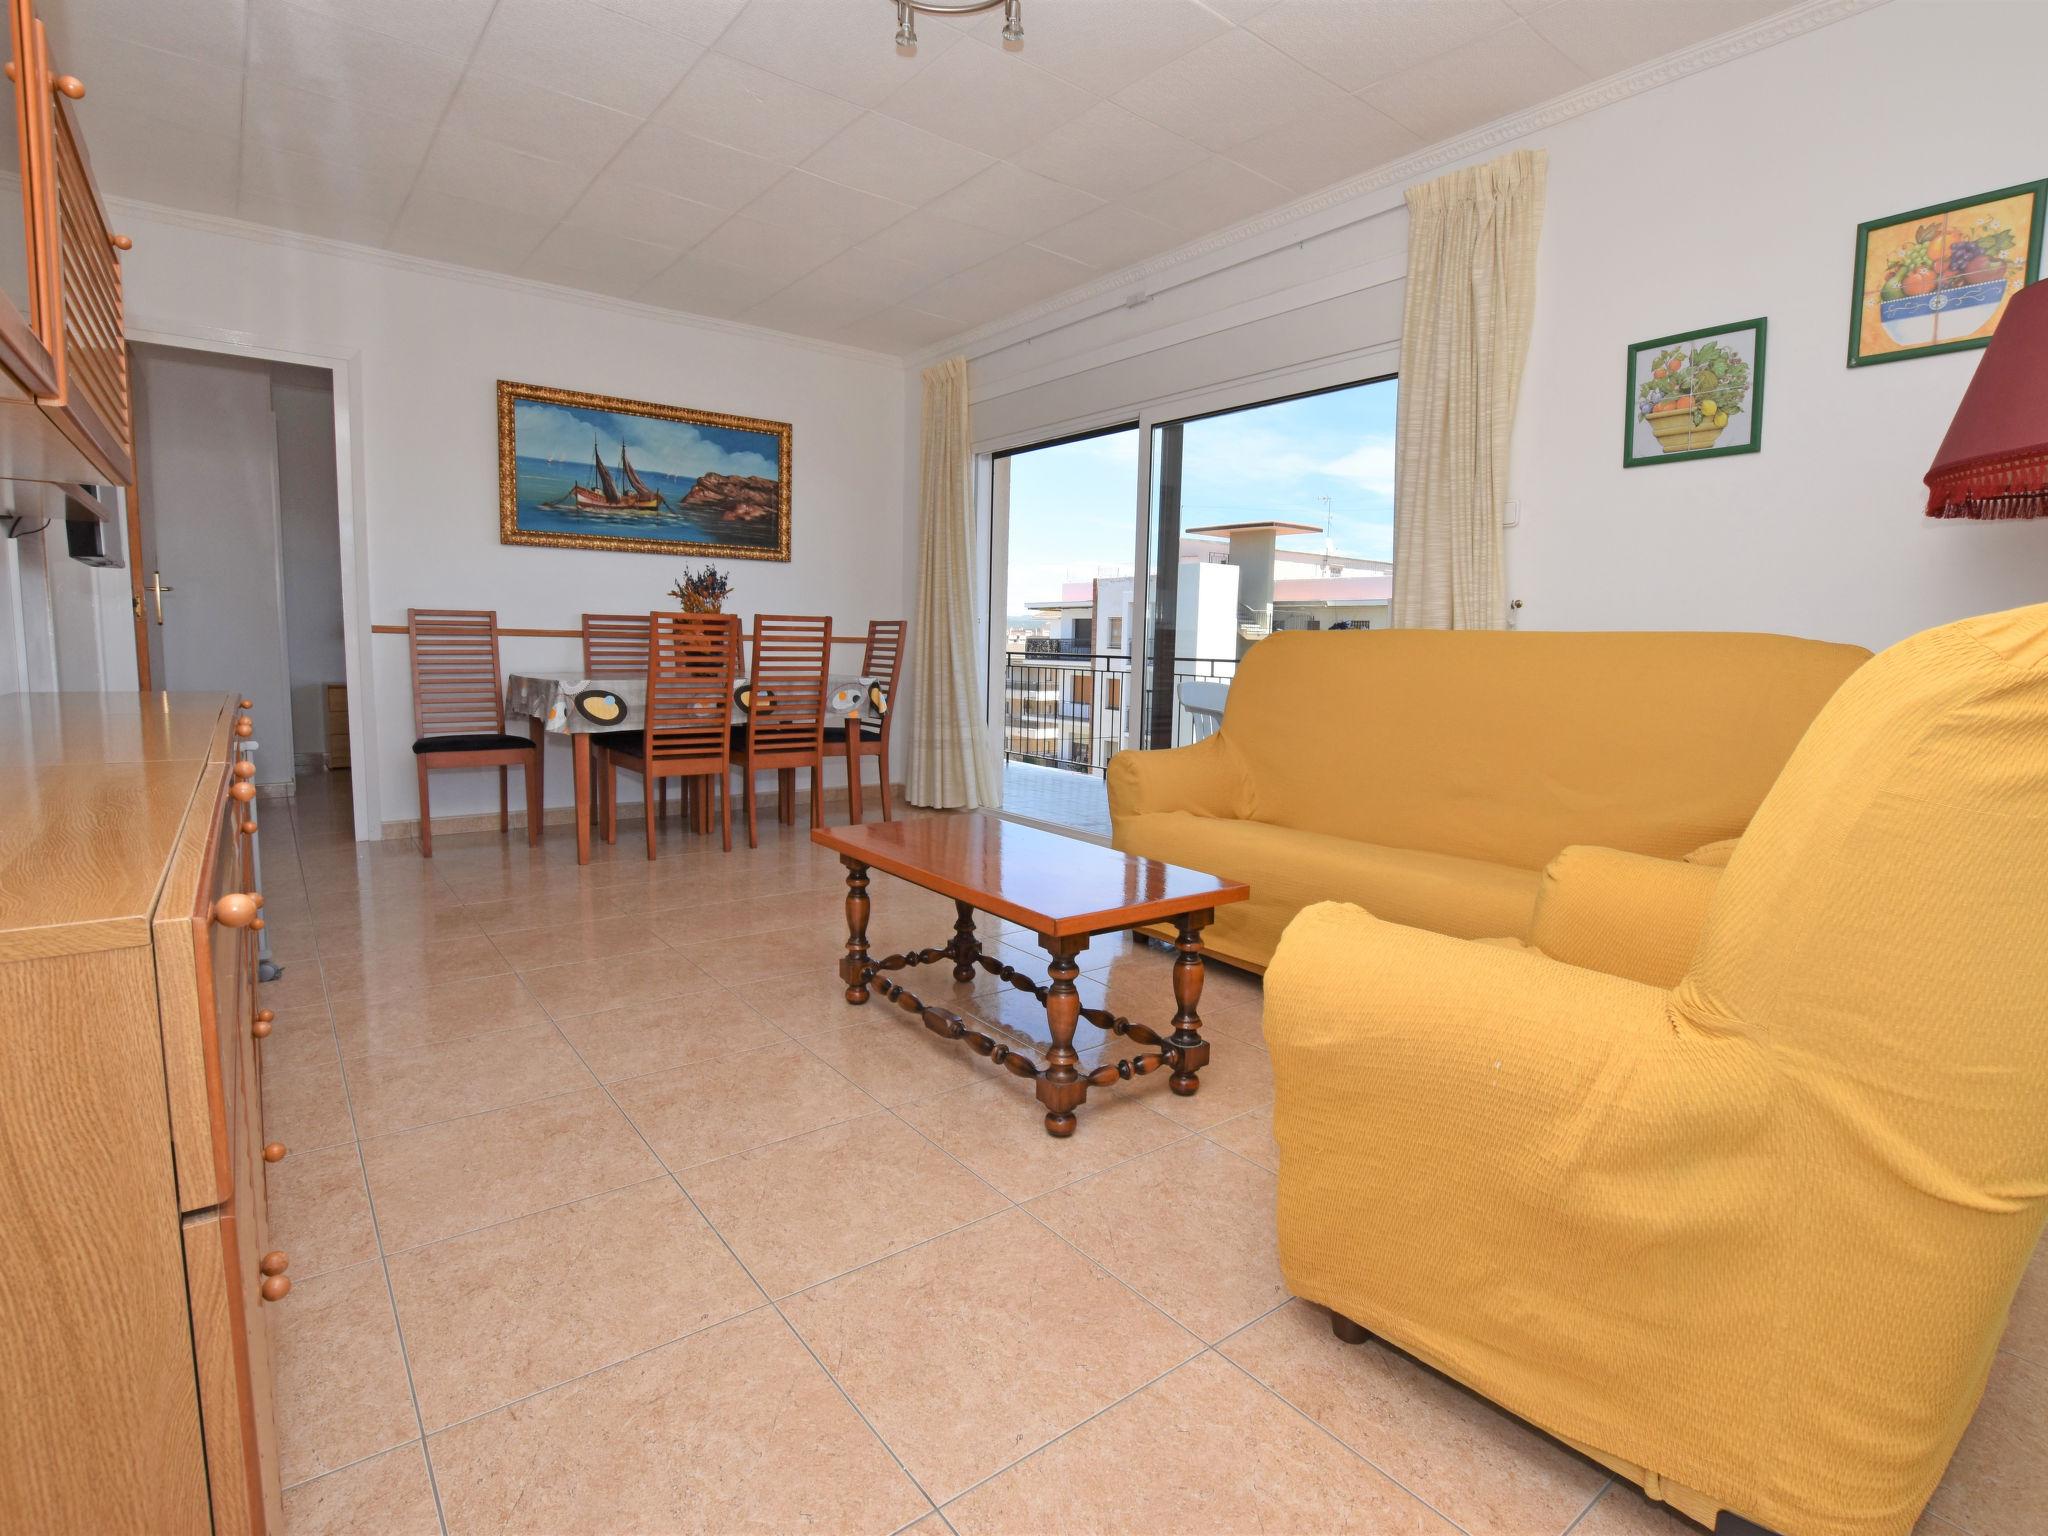 Photo 7 - Appartement de 3 chambres à Torredembarra avec terrasse et vues à la mer